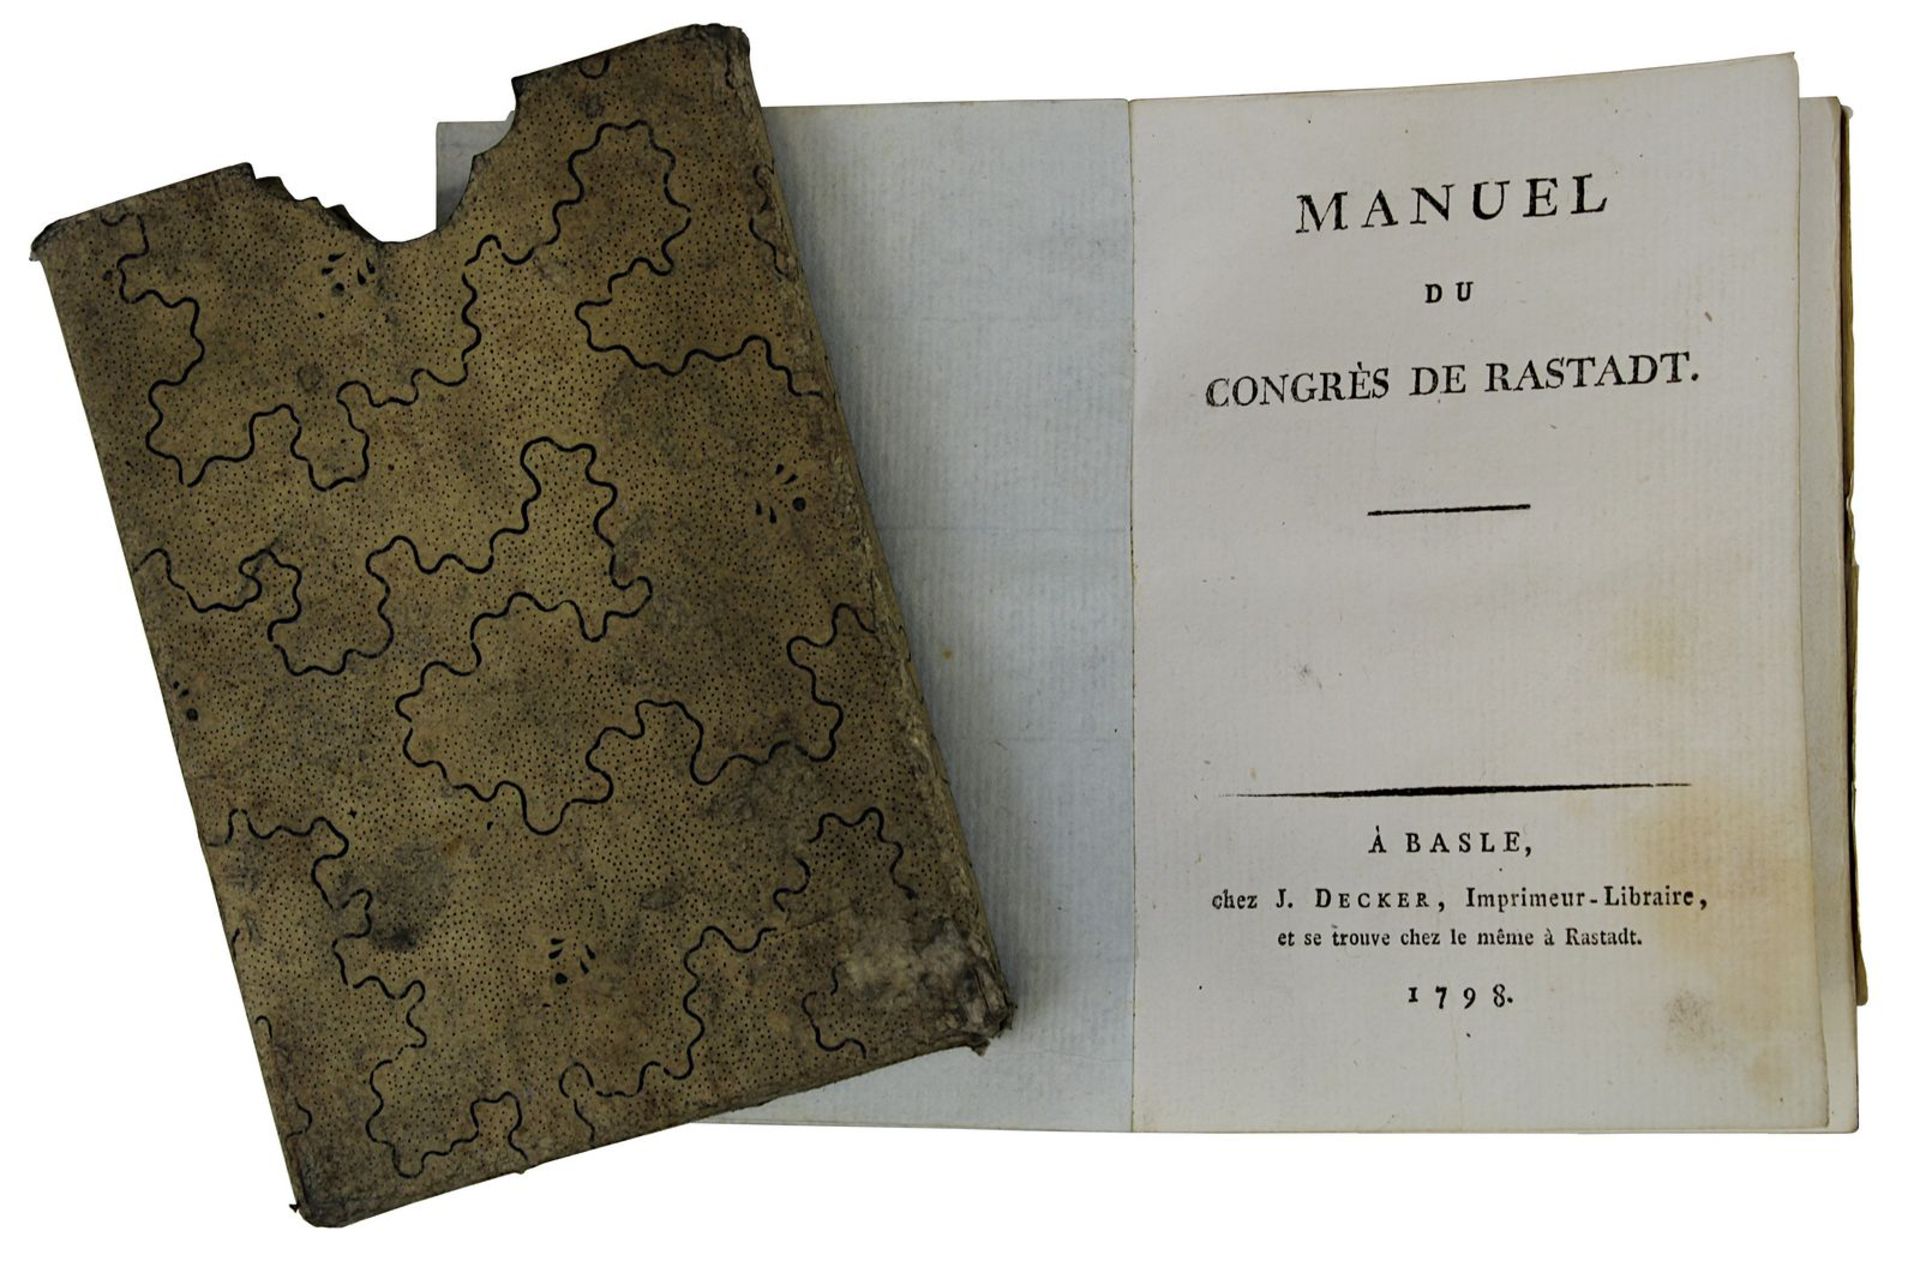 "Manuel du congrès de Rastadt", J. Decker Basel 1798, Pappeinband, Goldschnitt, in